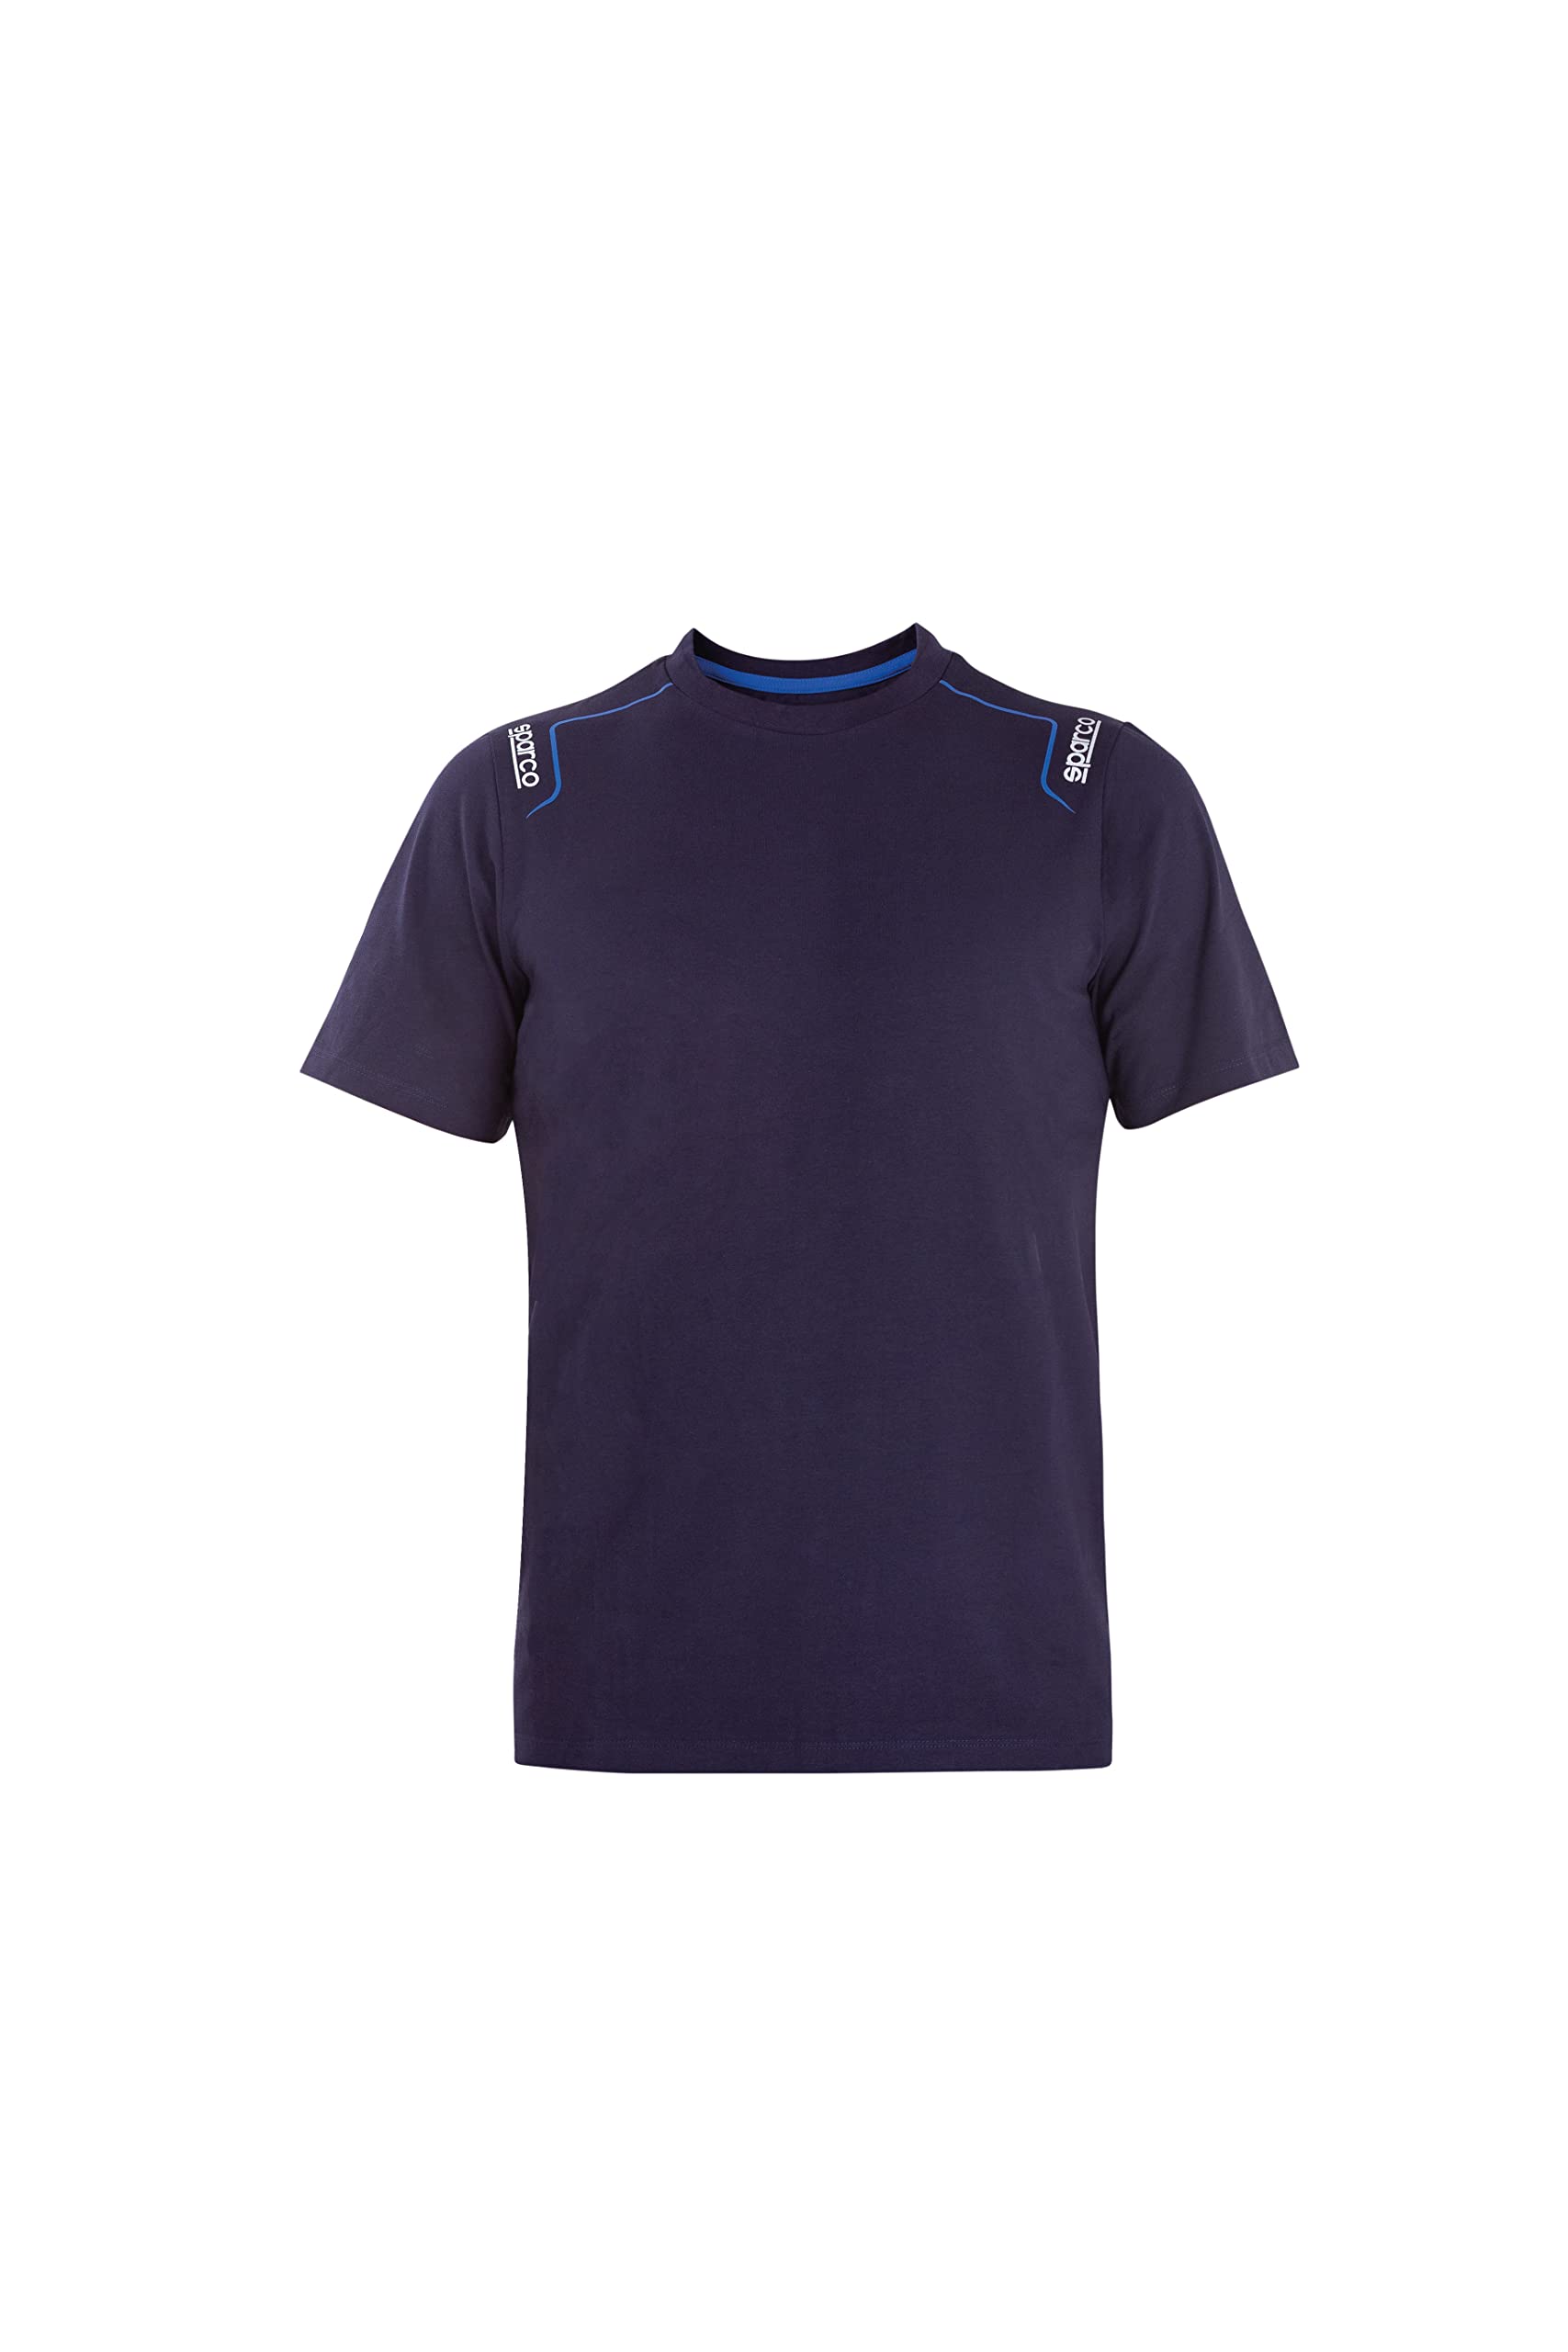 SPARCORACI Camiseta TECH Stretch Azul Marino T S von Sparco